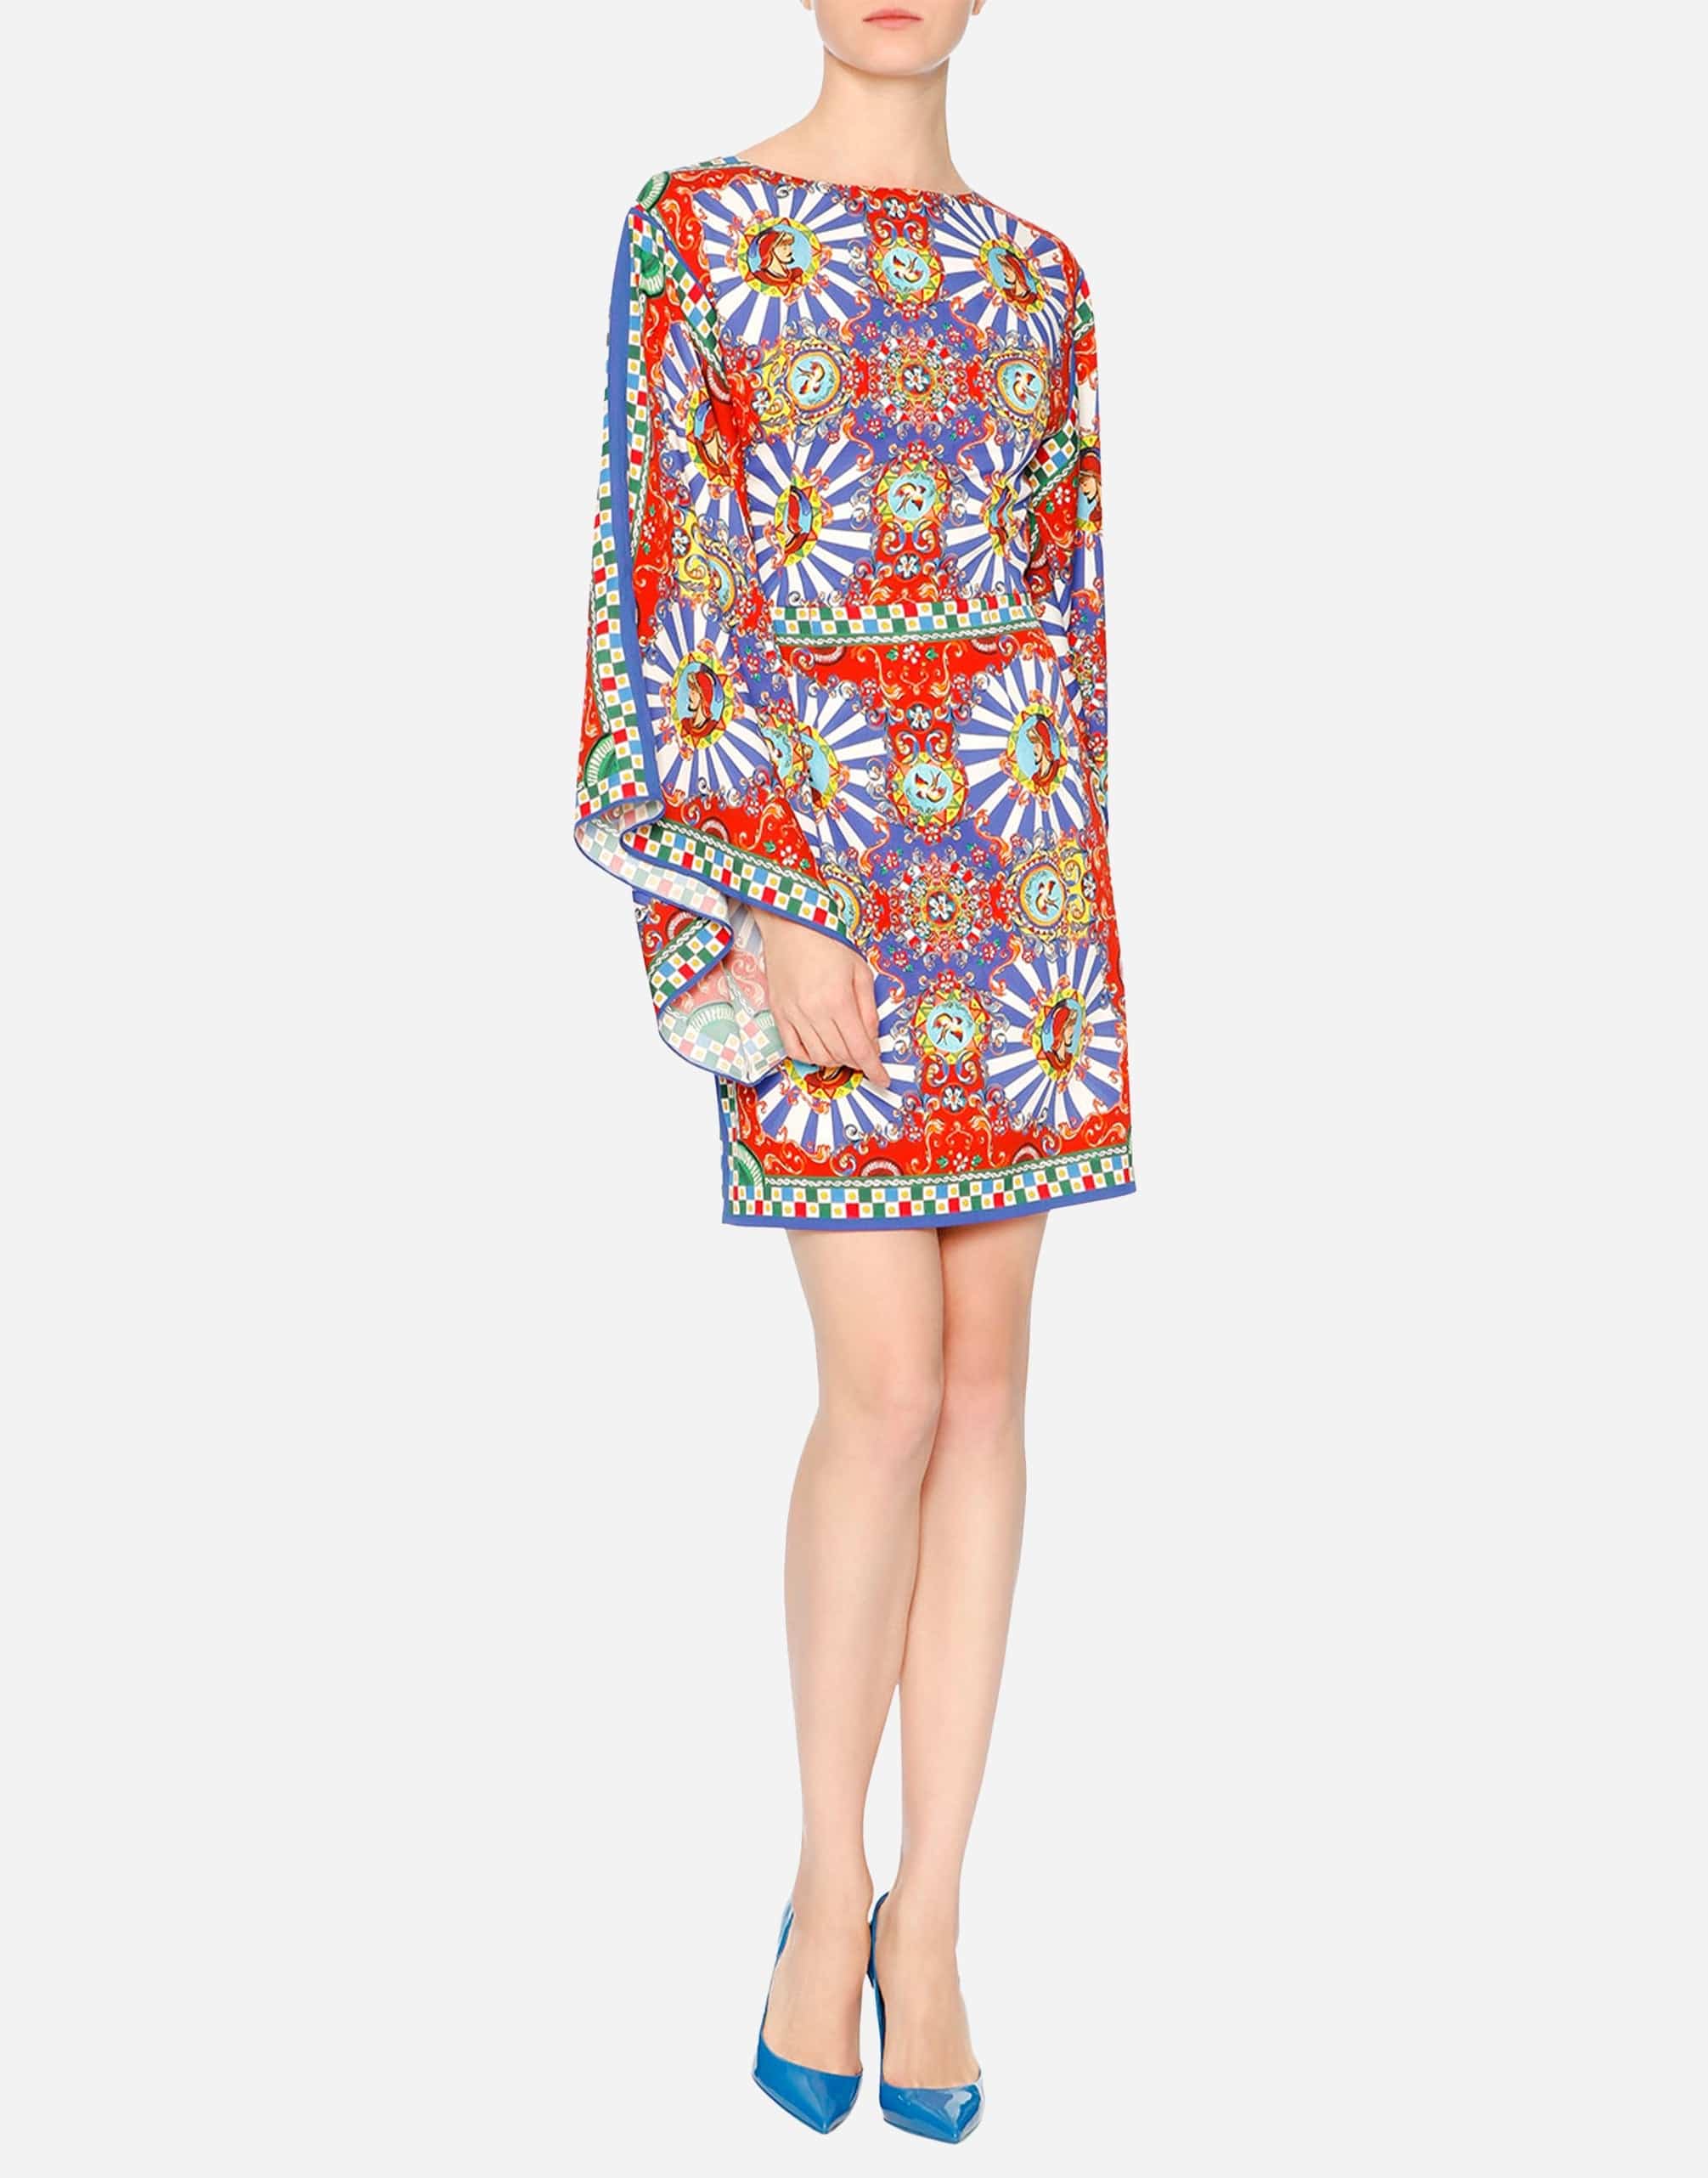 Dolce & Gabbana Full-Sleeve Carretto-Print Sheath Dress